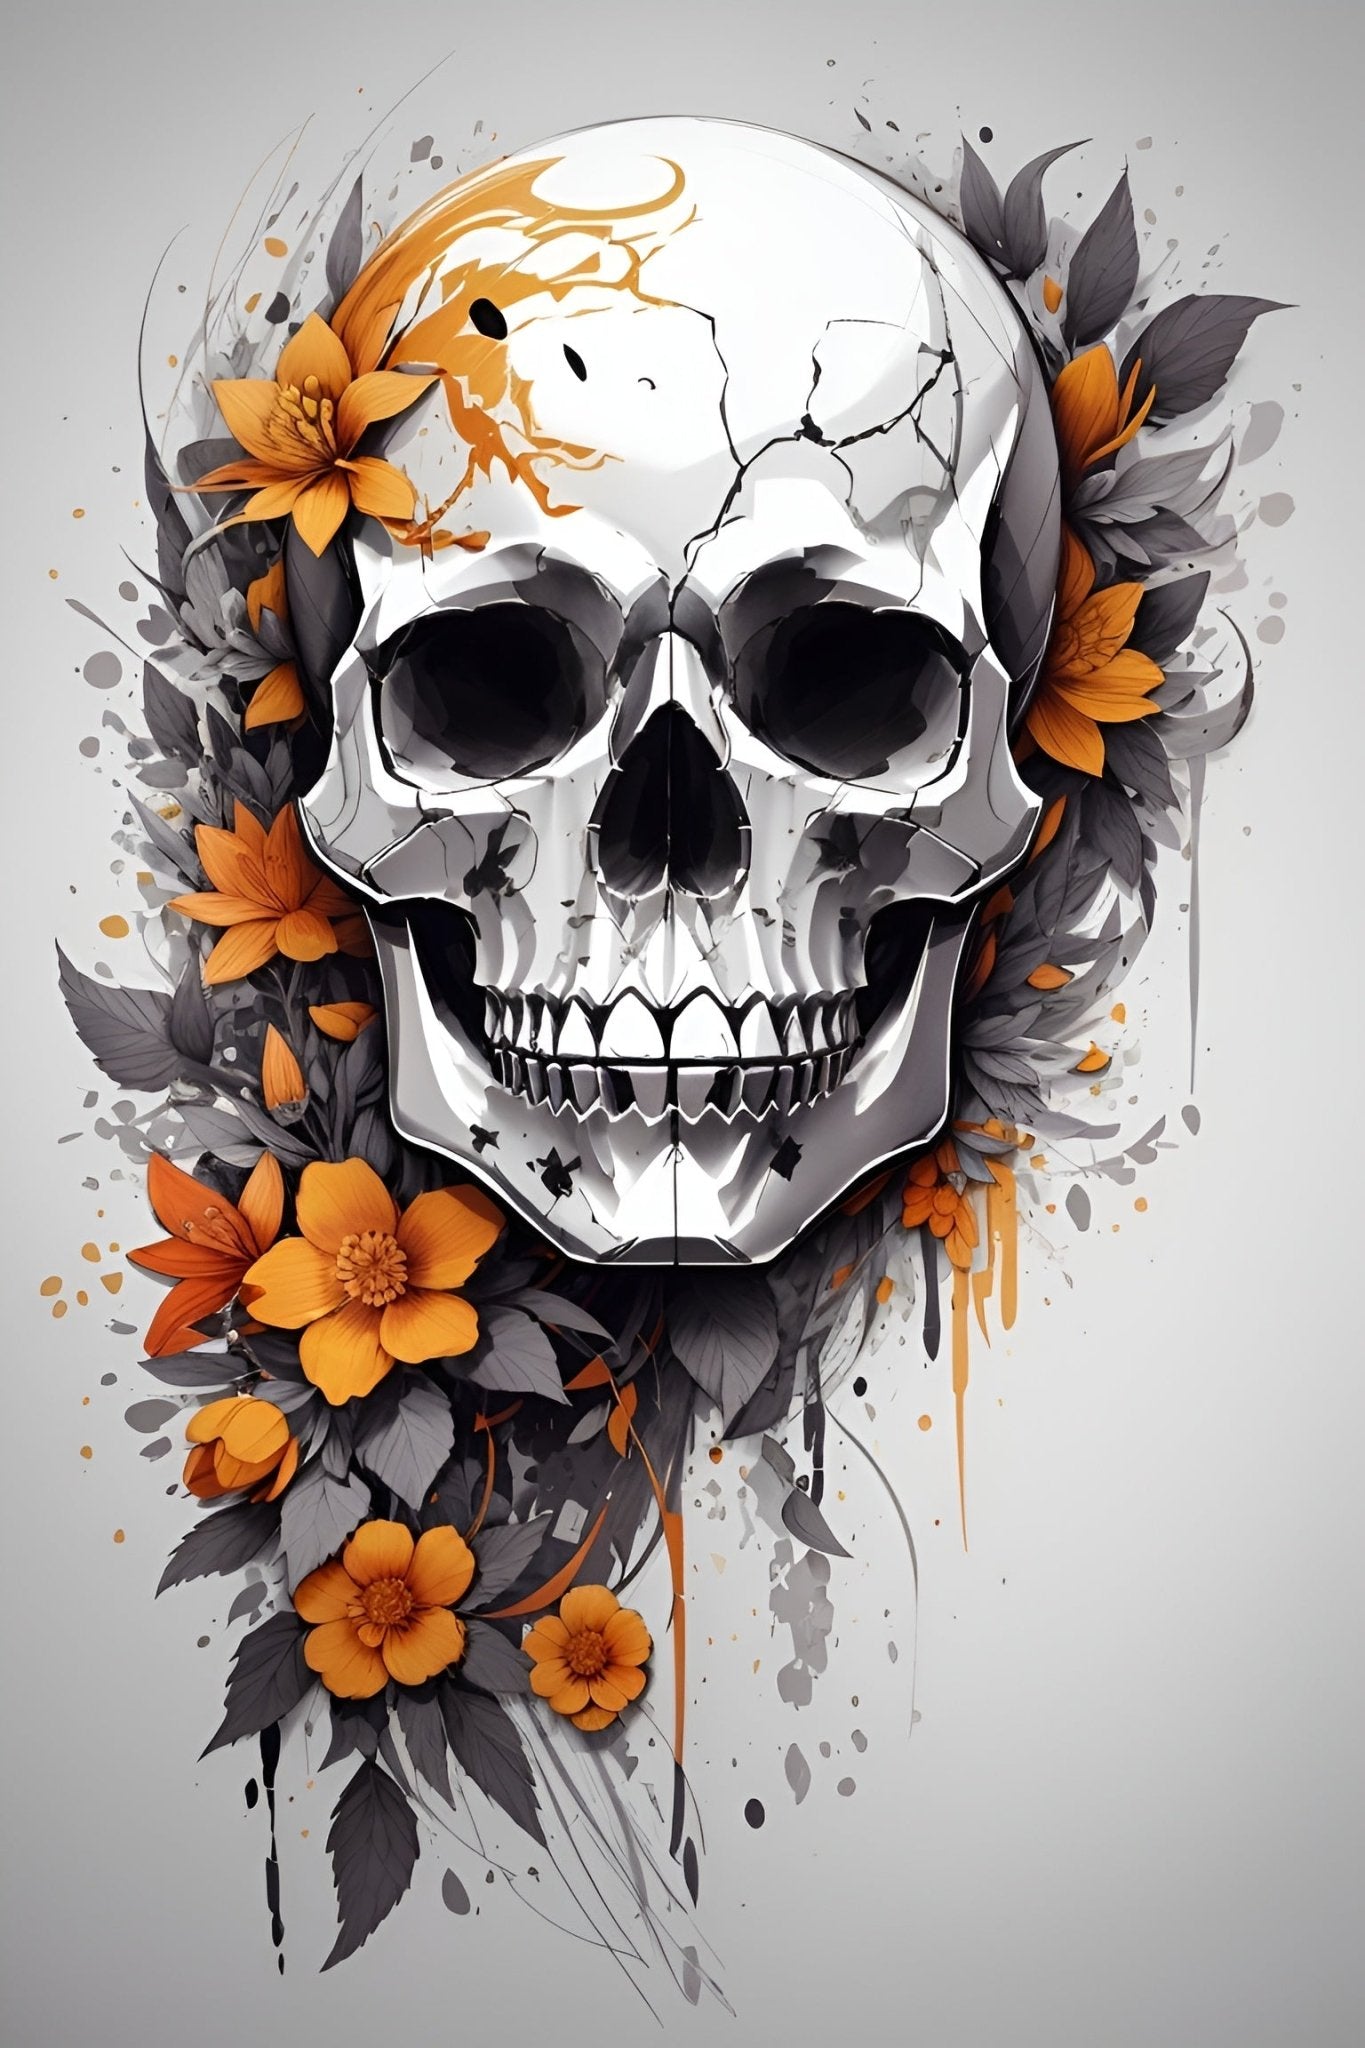 Skull Artistry - Paint by Numbers - Artslo.com